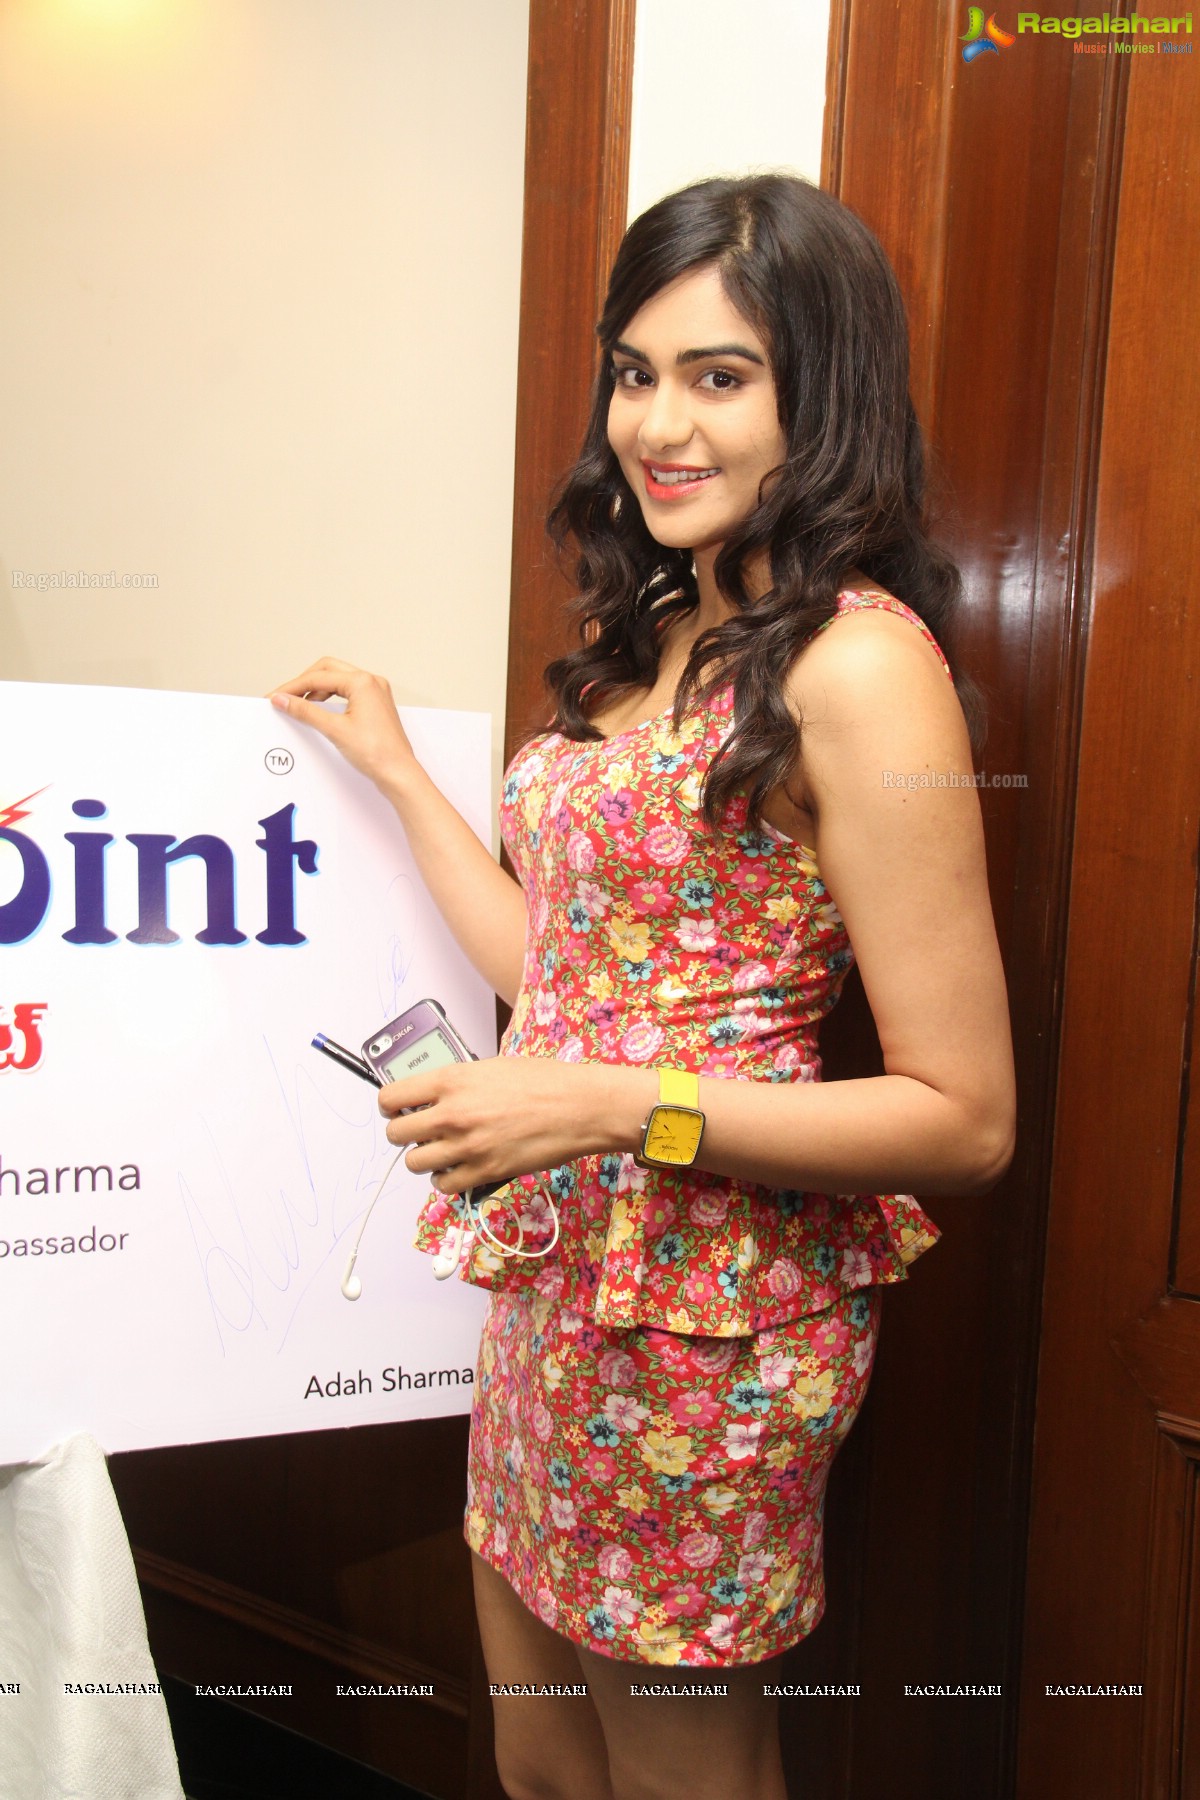 Cell Point announces Adah Sharma as their new brand Ambassador